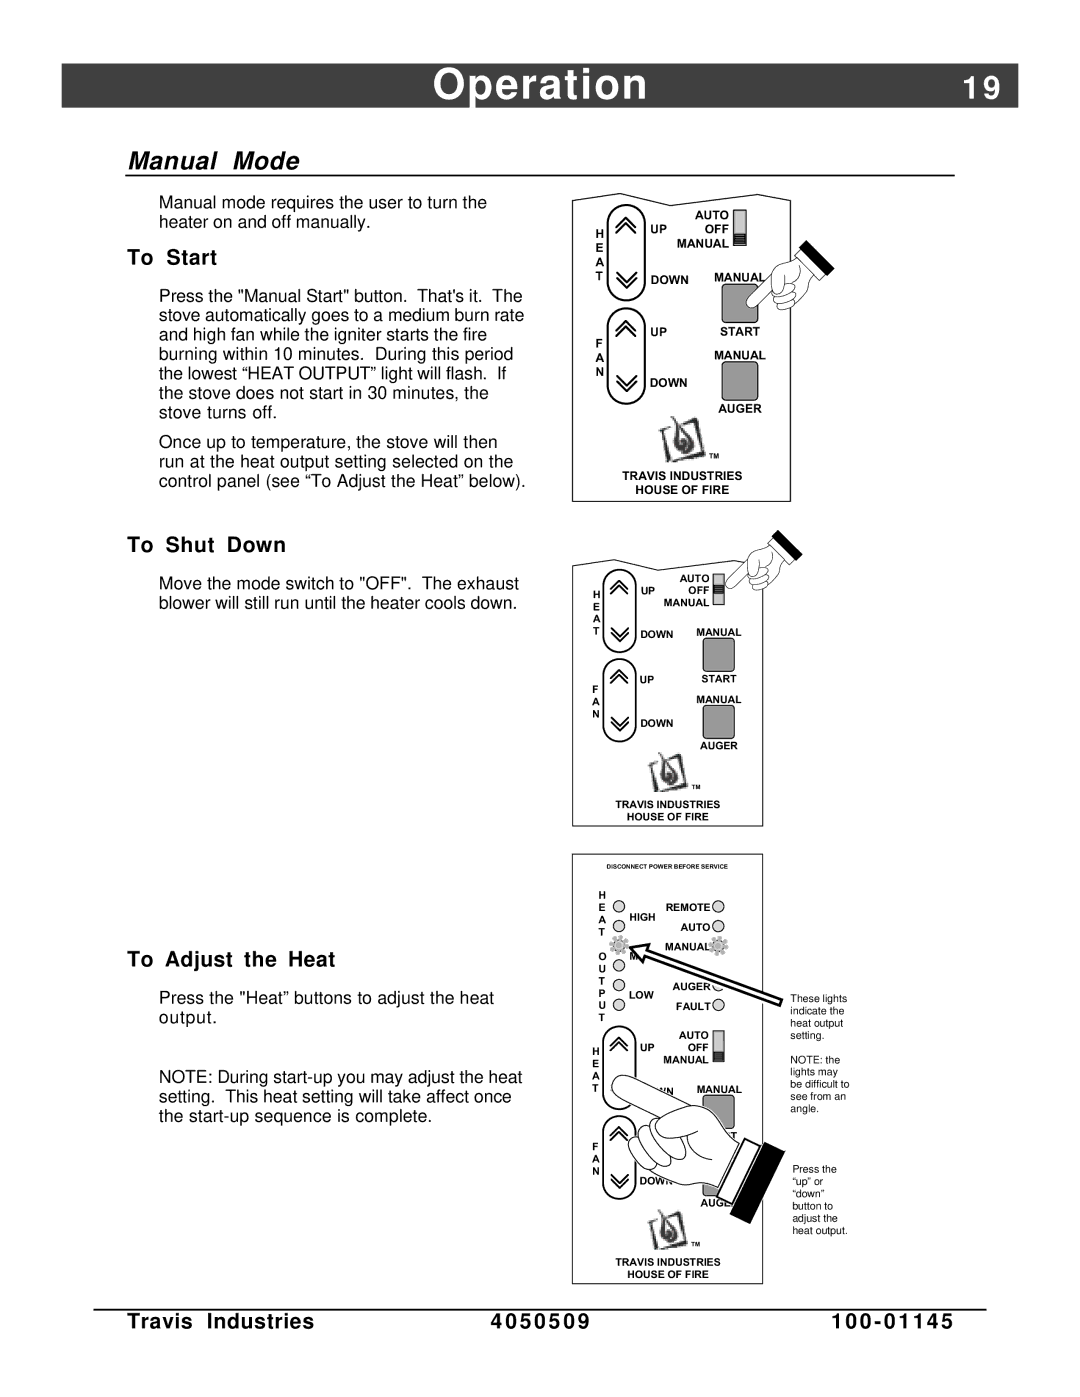 Lopi Yankee Bay Pellet Insert manual Manual Mode, To Start, To Shut Down, To Adjust the Heat 